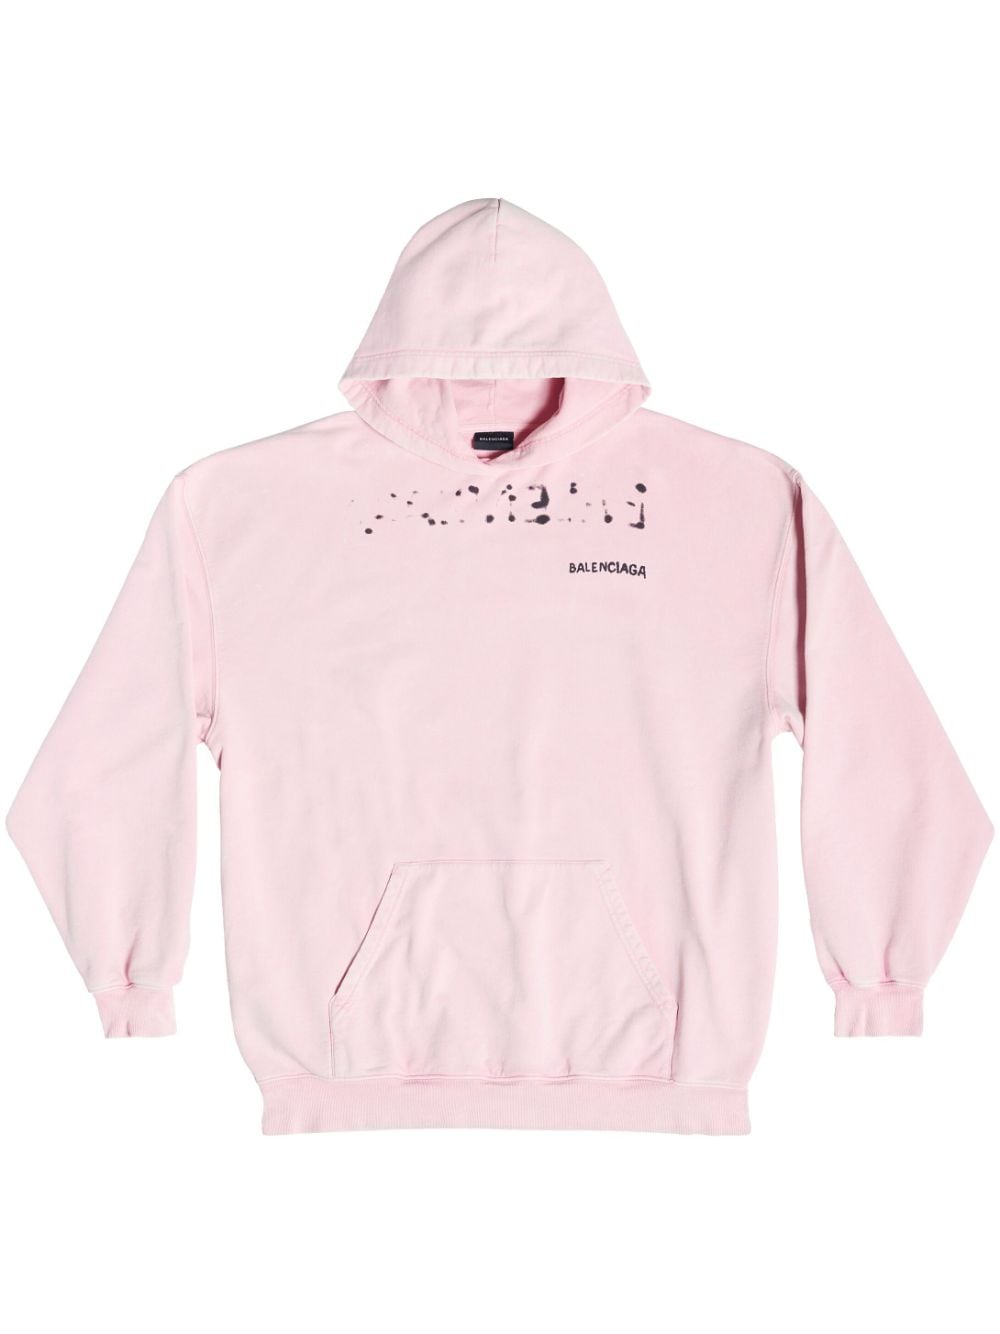 Balenciaga Hoodie met logo - Roze